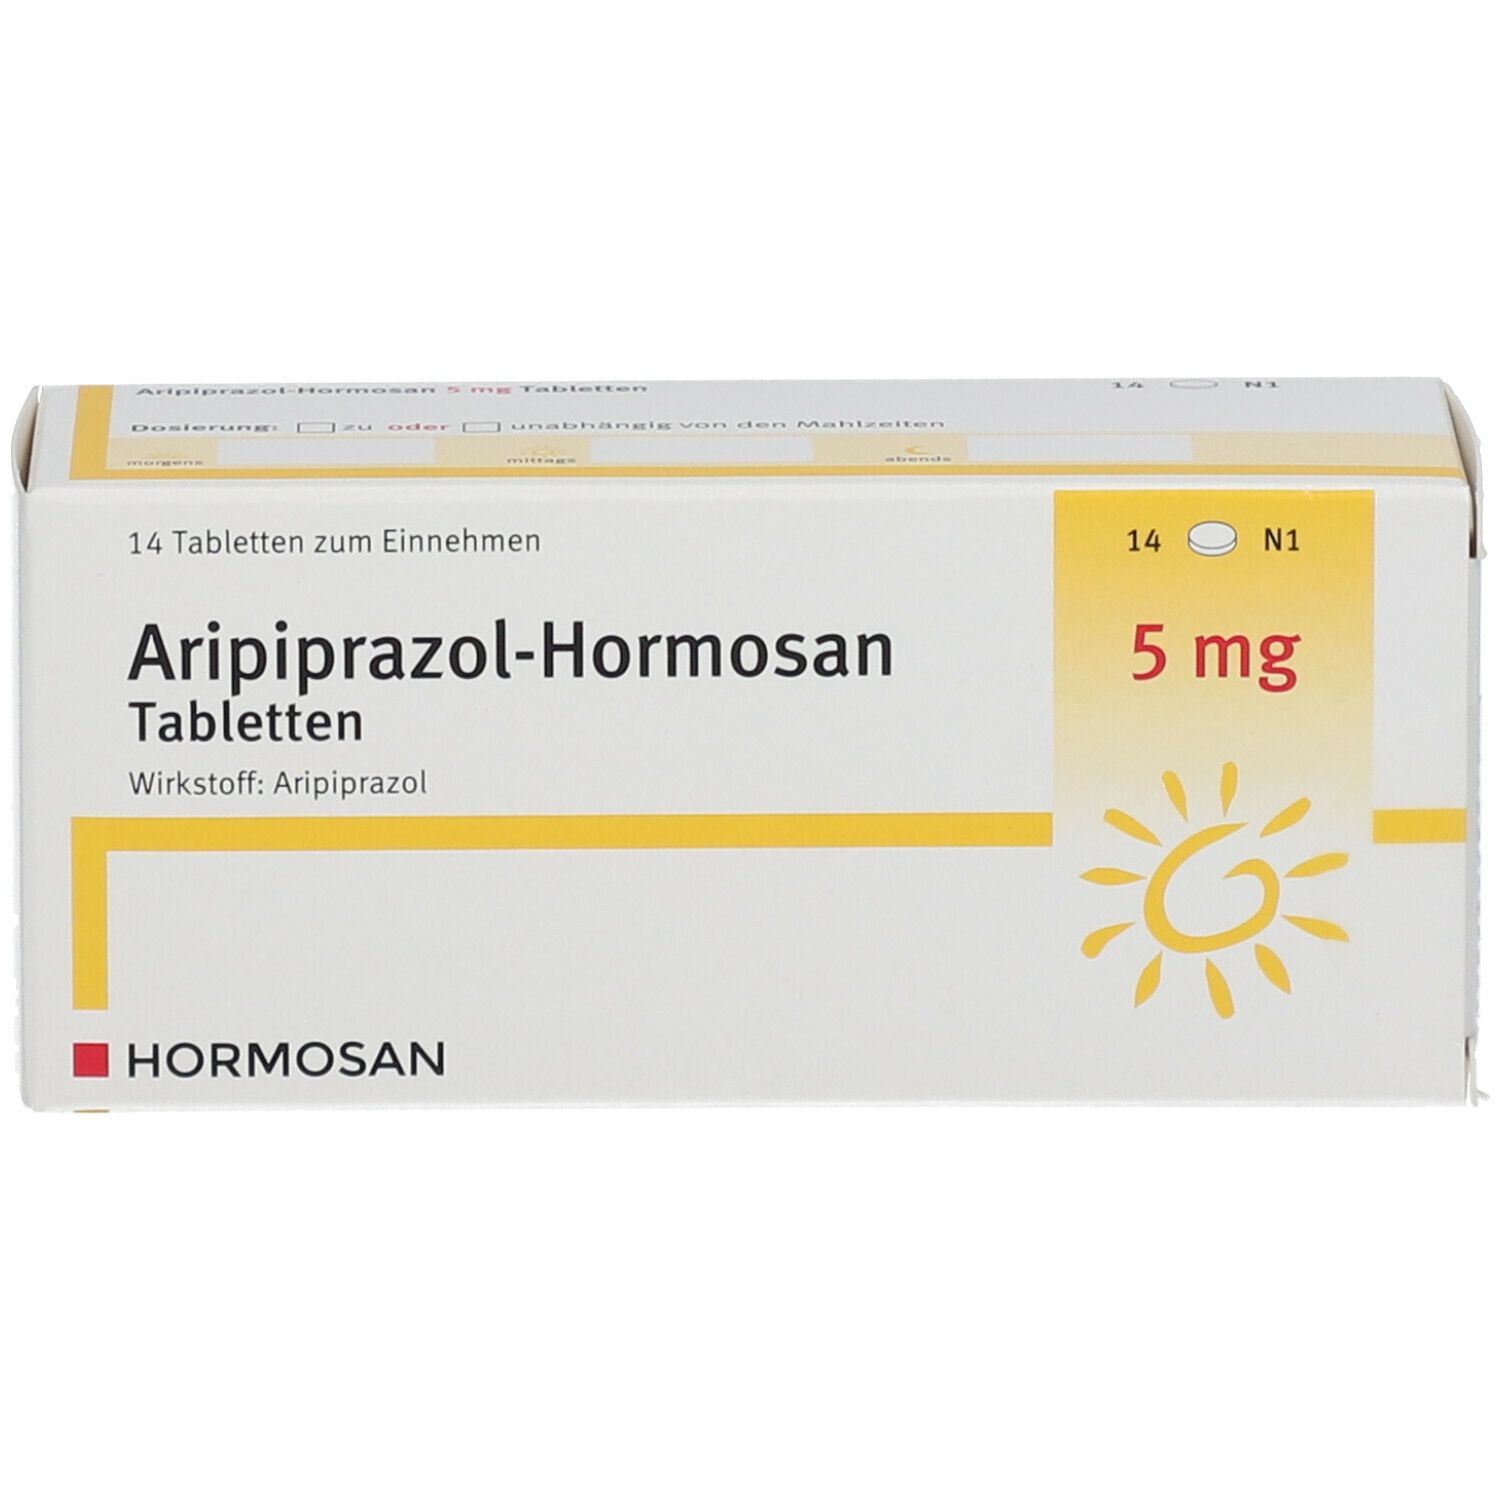 Aripiprazol-Hormosan 5 mg